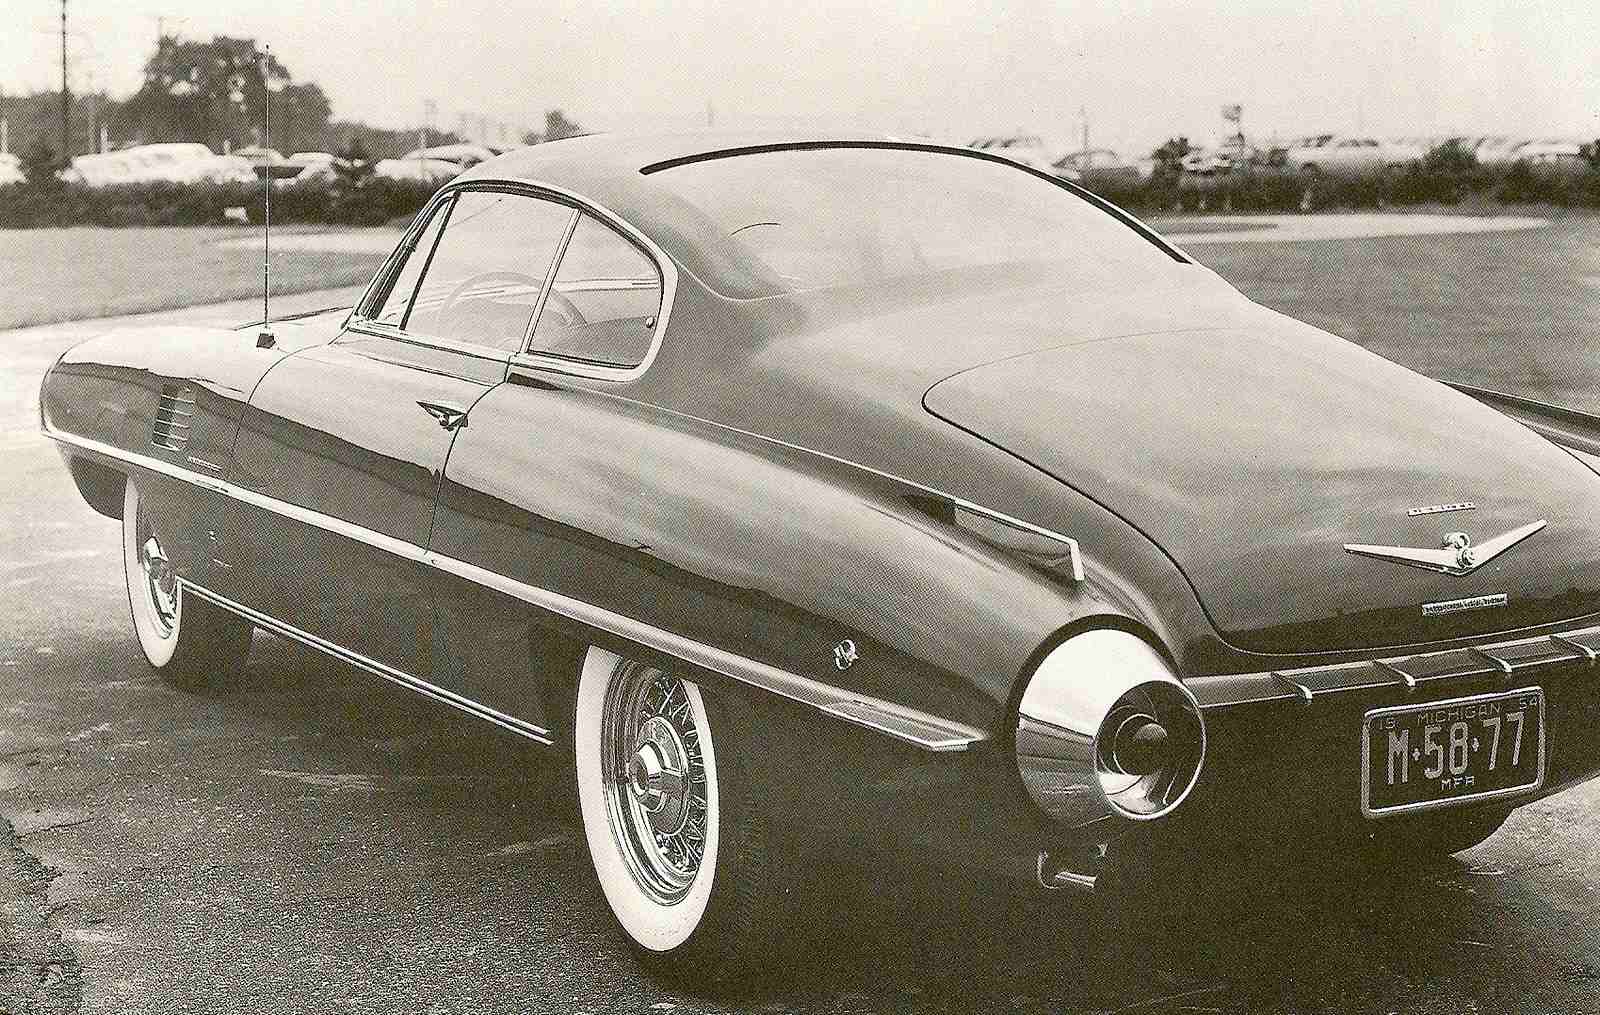 1955. DeSoto Adventurer II Concept (Ghia)